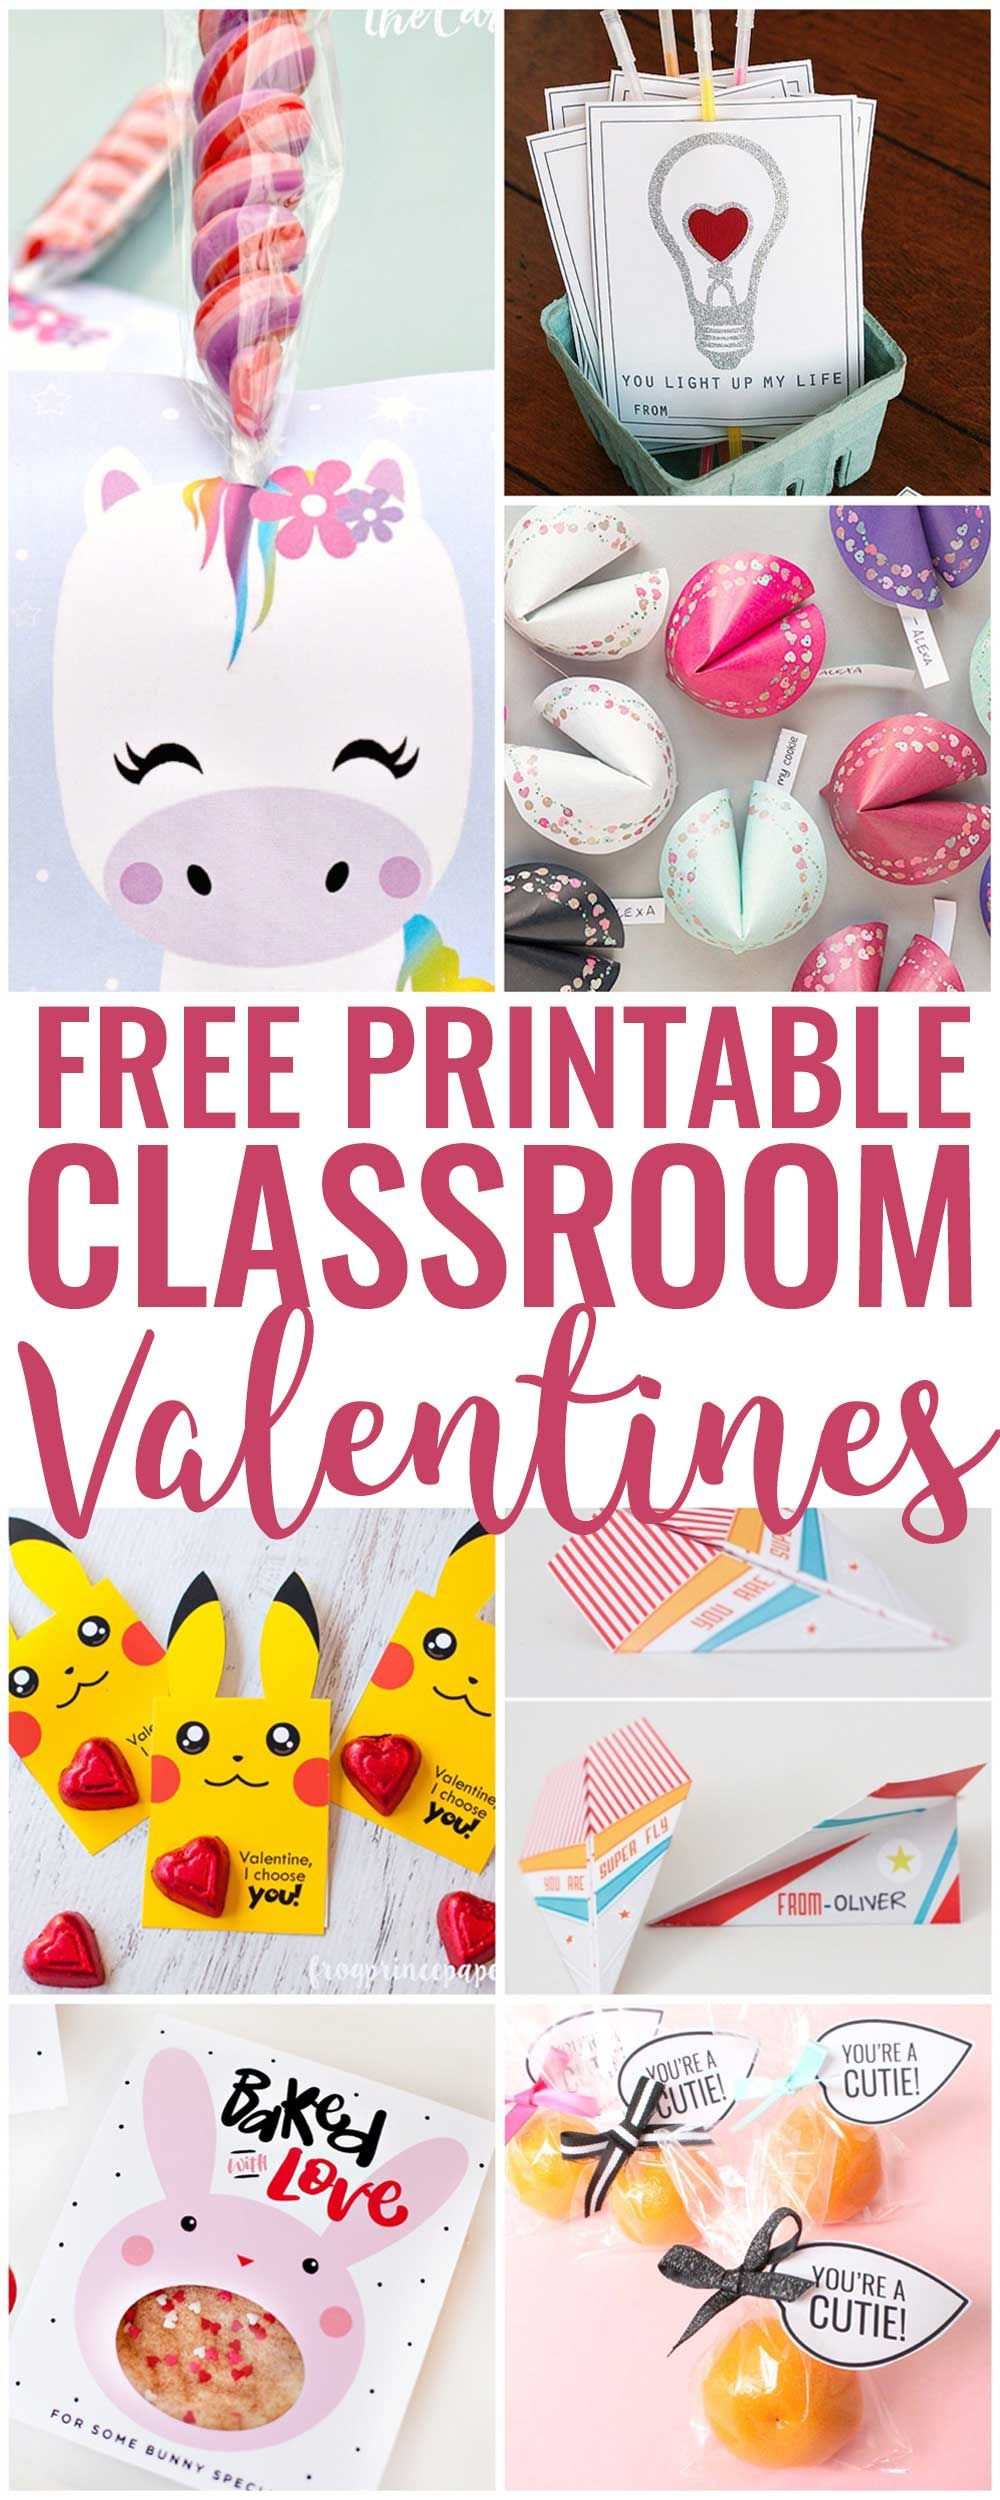 Classroom Valentine Gift Ideas
 35 Classroom Valentines